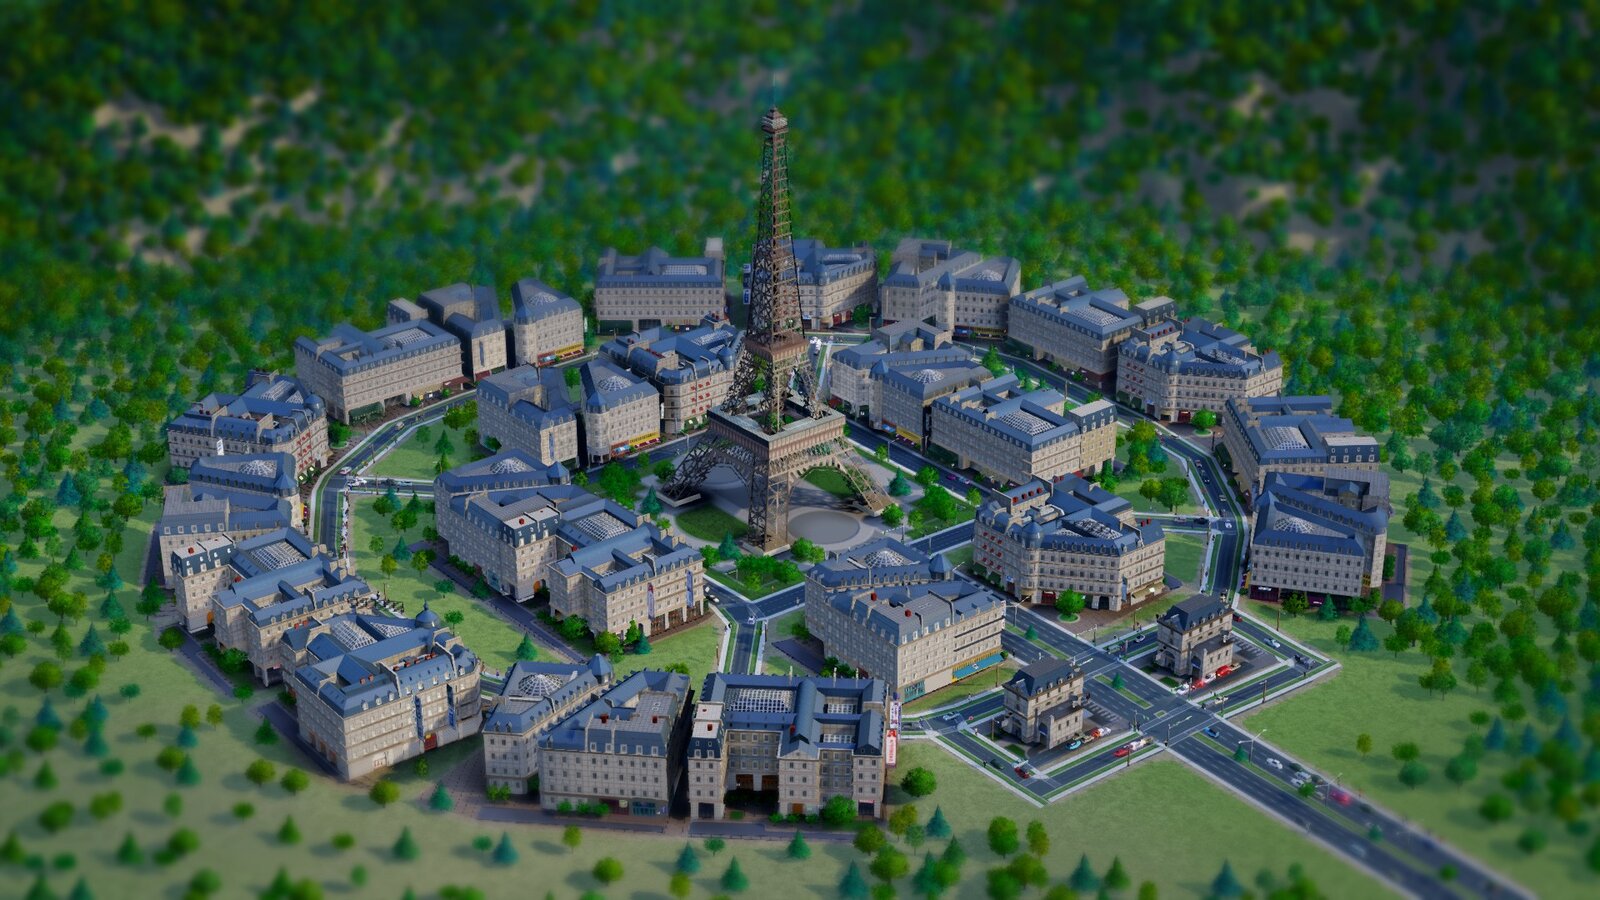 SimCity: French City Set